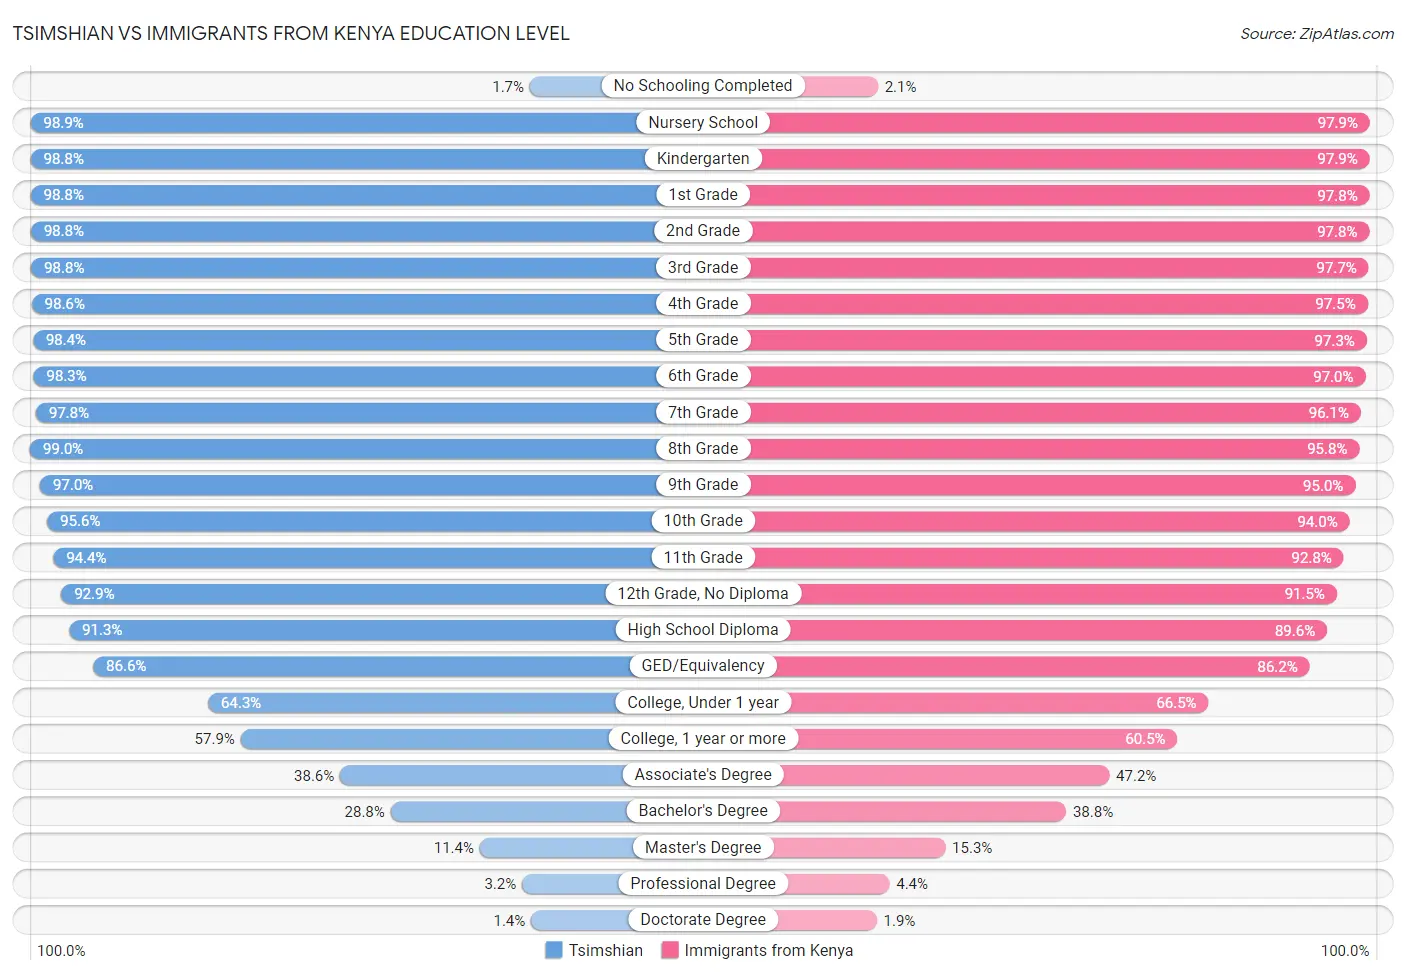 Tsimshian vs Immigrants from Kenya Education Level